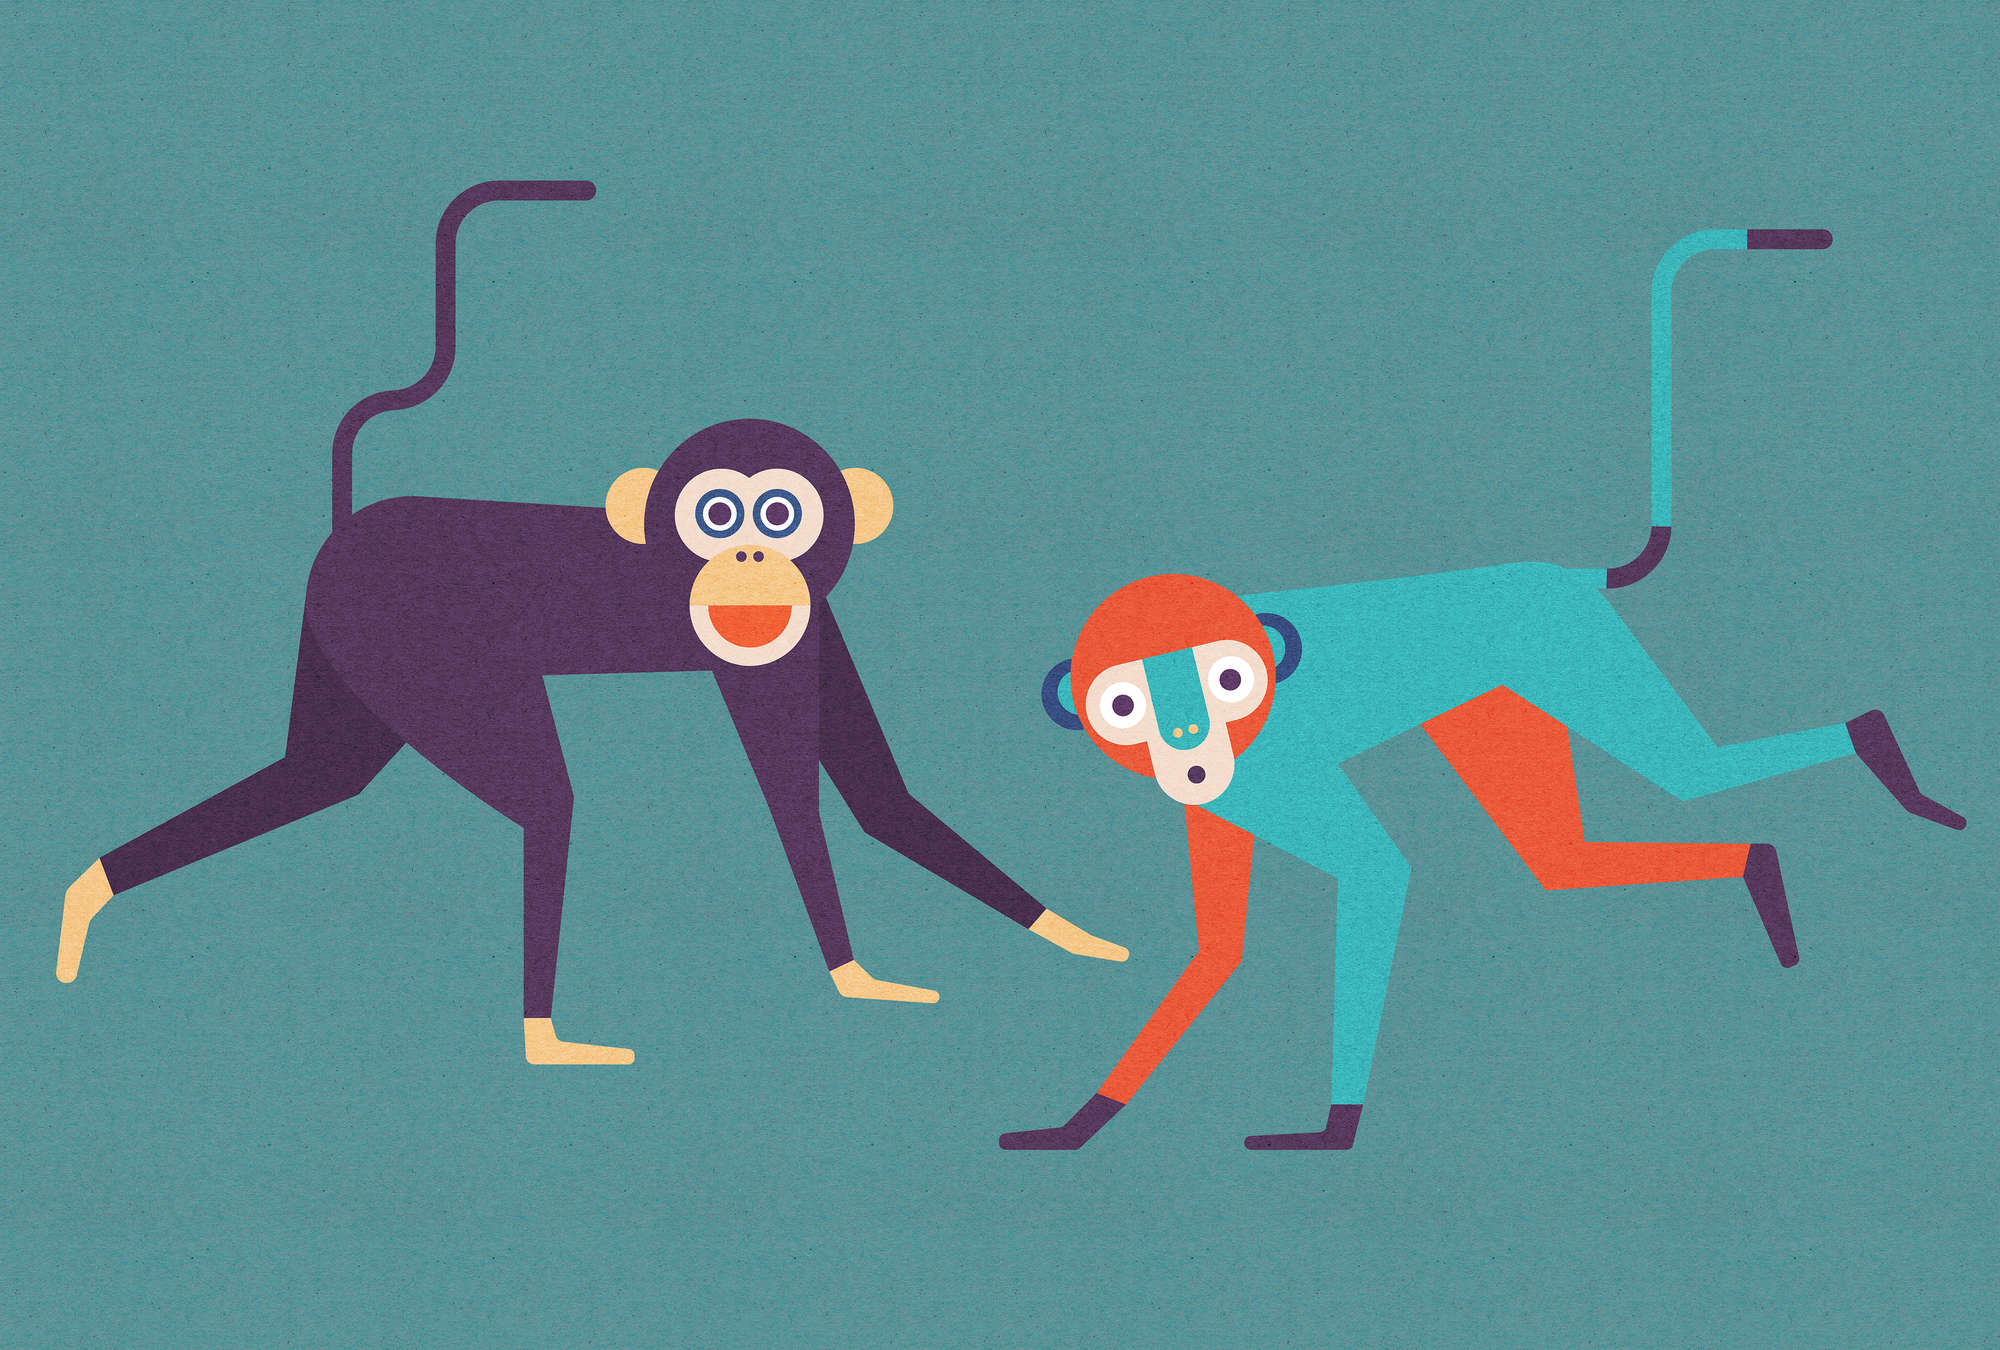             Monkey Busines 1 - Papel pintado con estructura de cartón, pandilla de monos en estilo cómic - Beige, Naranja | Liso mate
        